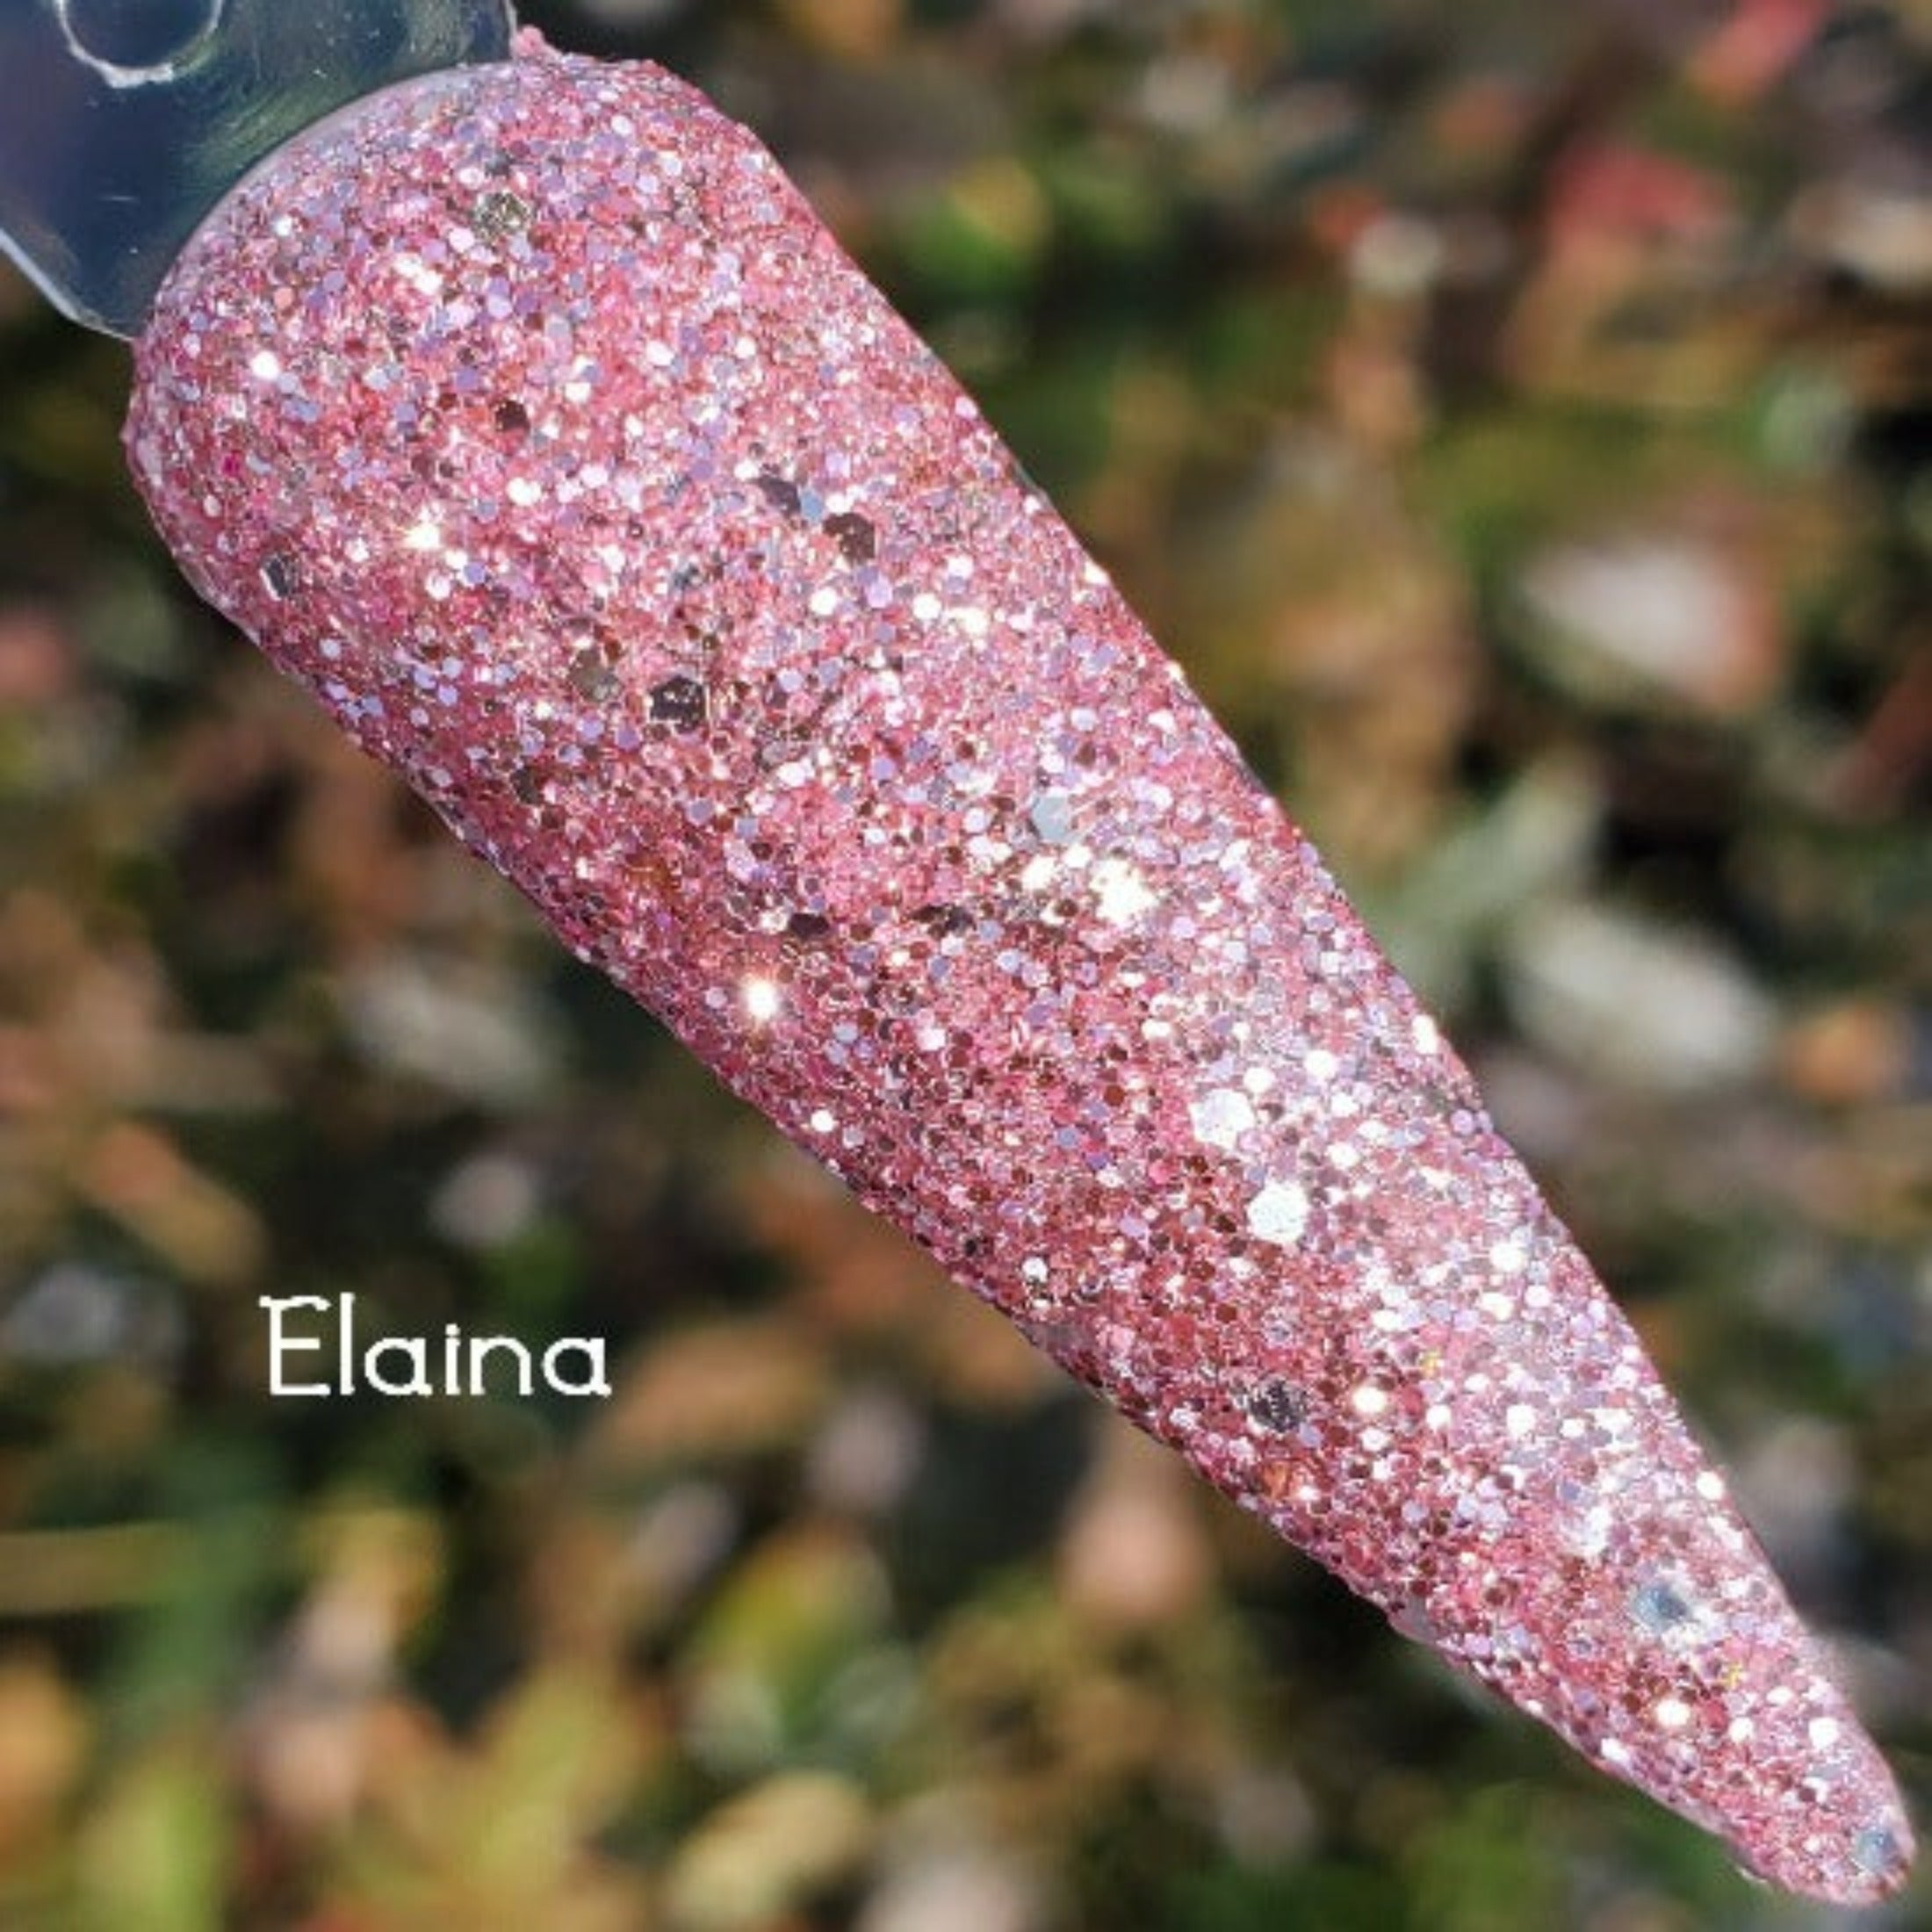 Fairy Dust (#99) - Iridescent pink chunky glitter dip powder